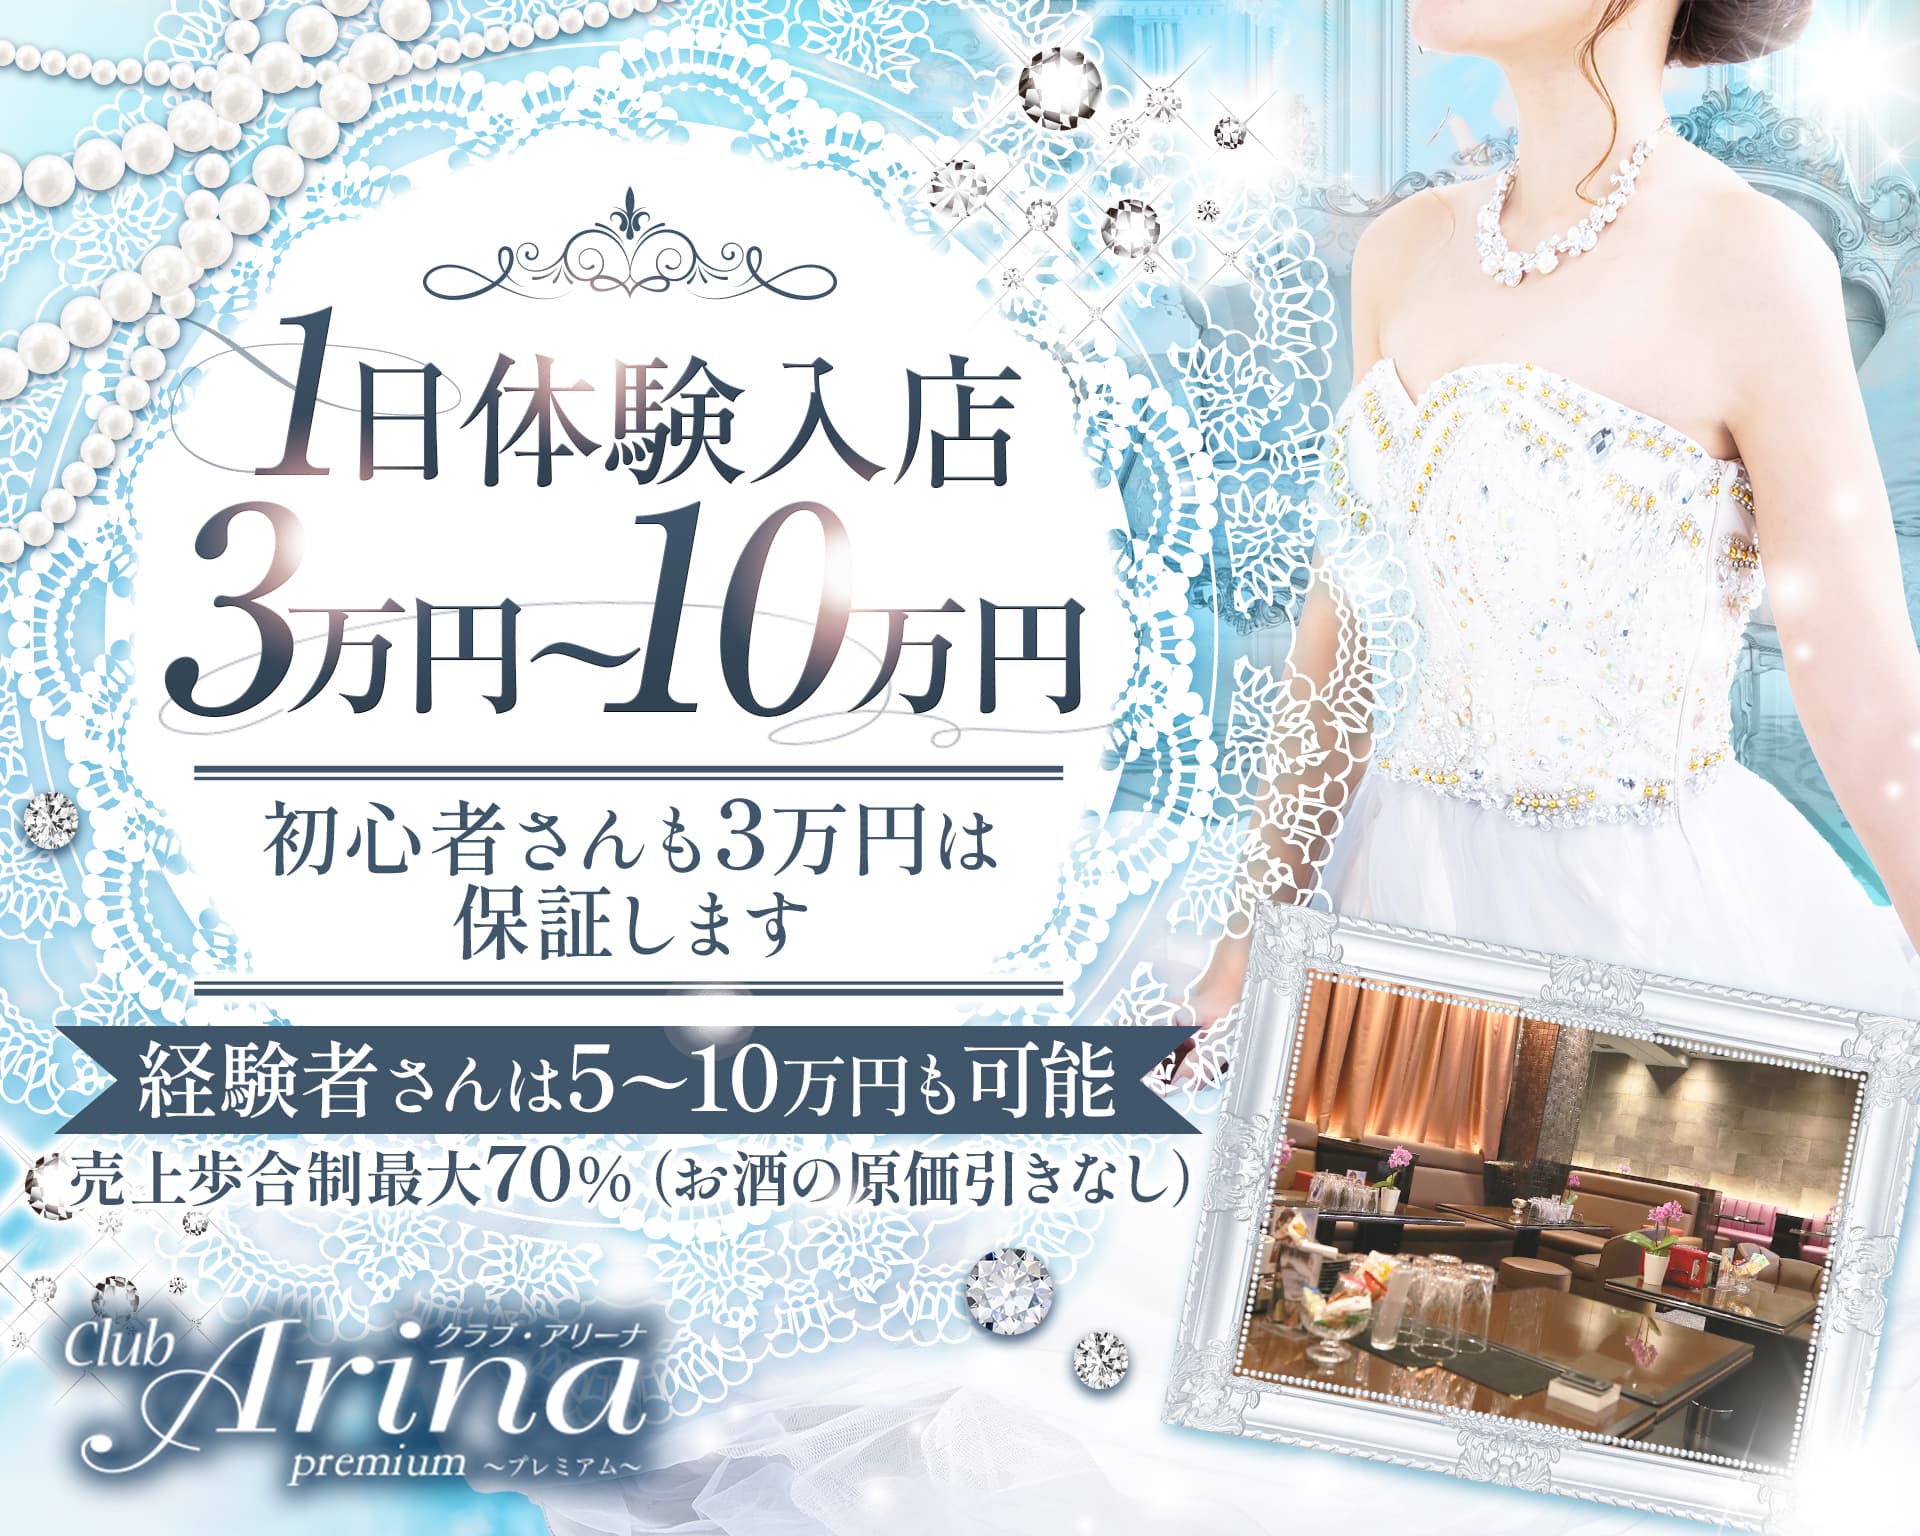 Club Arina Premium(アリーナ)【公式求人・体入情報】 中洲キャバクラ TOP画像